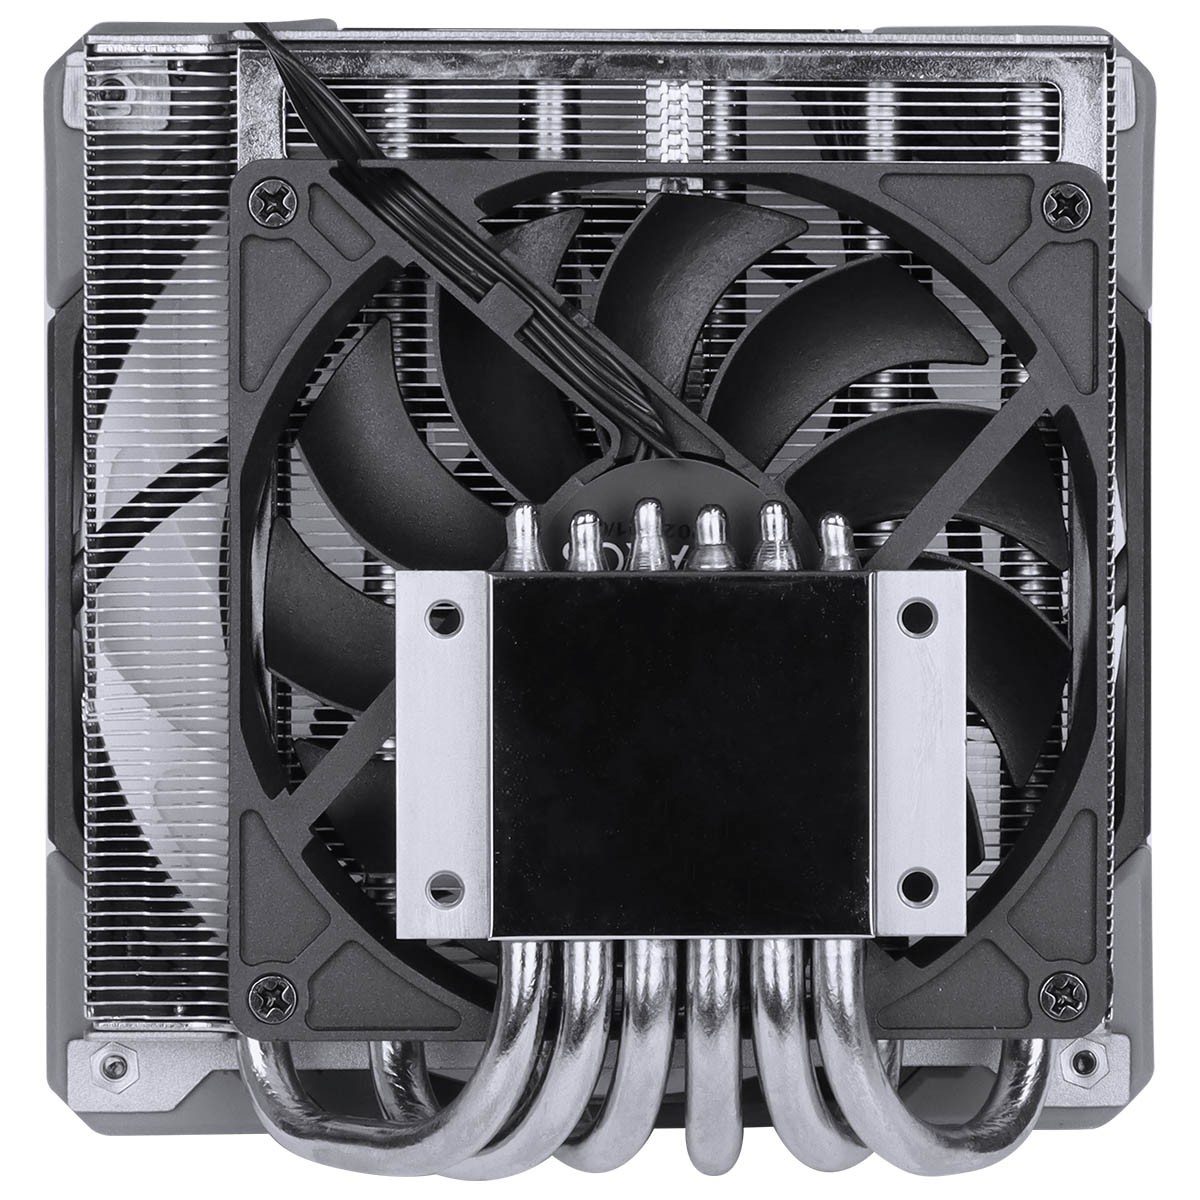 Cooler para Processador Nótus LP ARGB, 120mm, Intel-AMD, PCYNTLPARGB